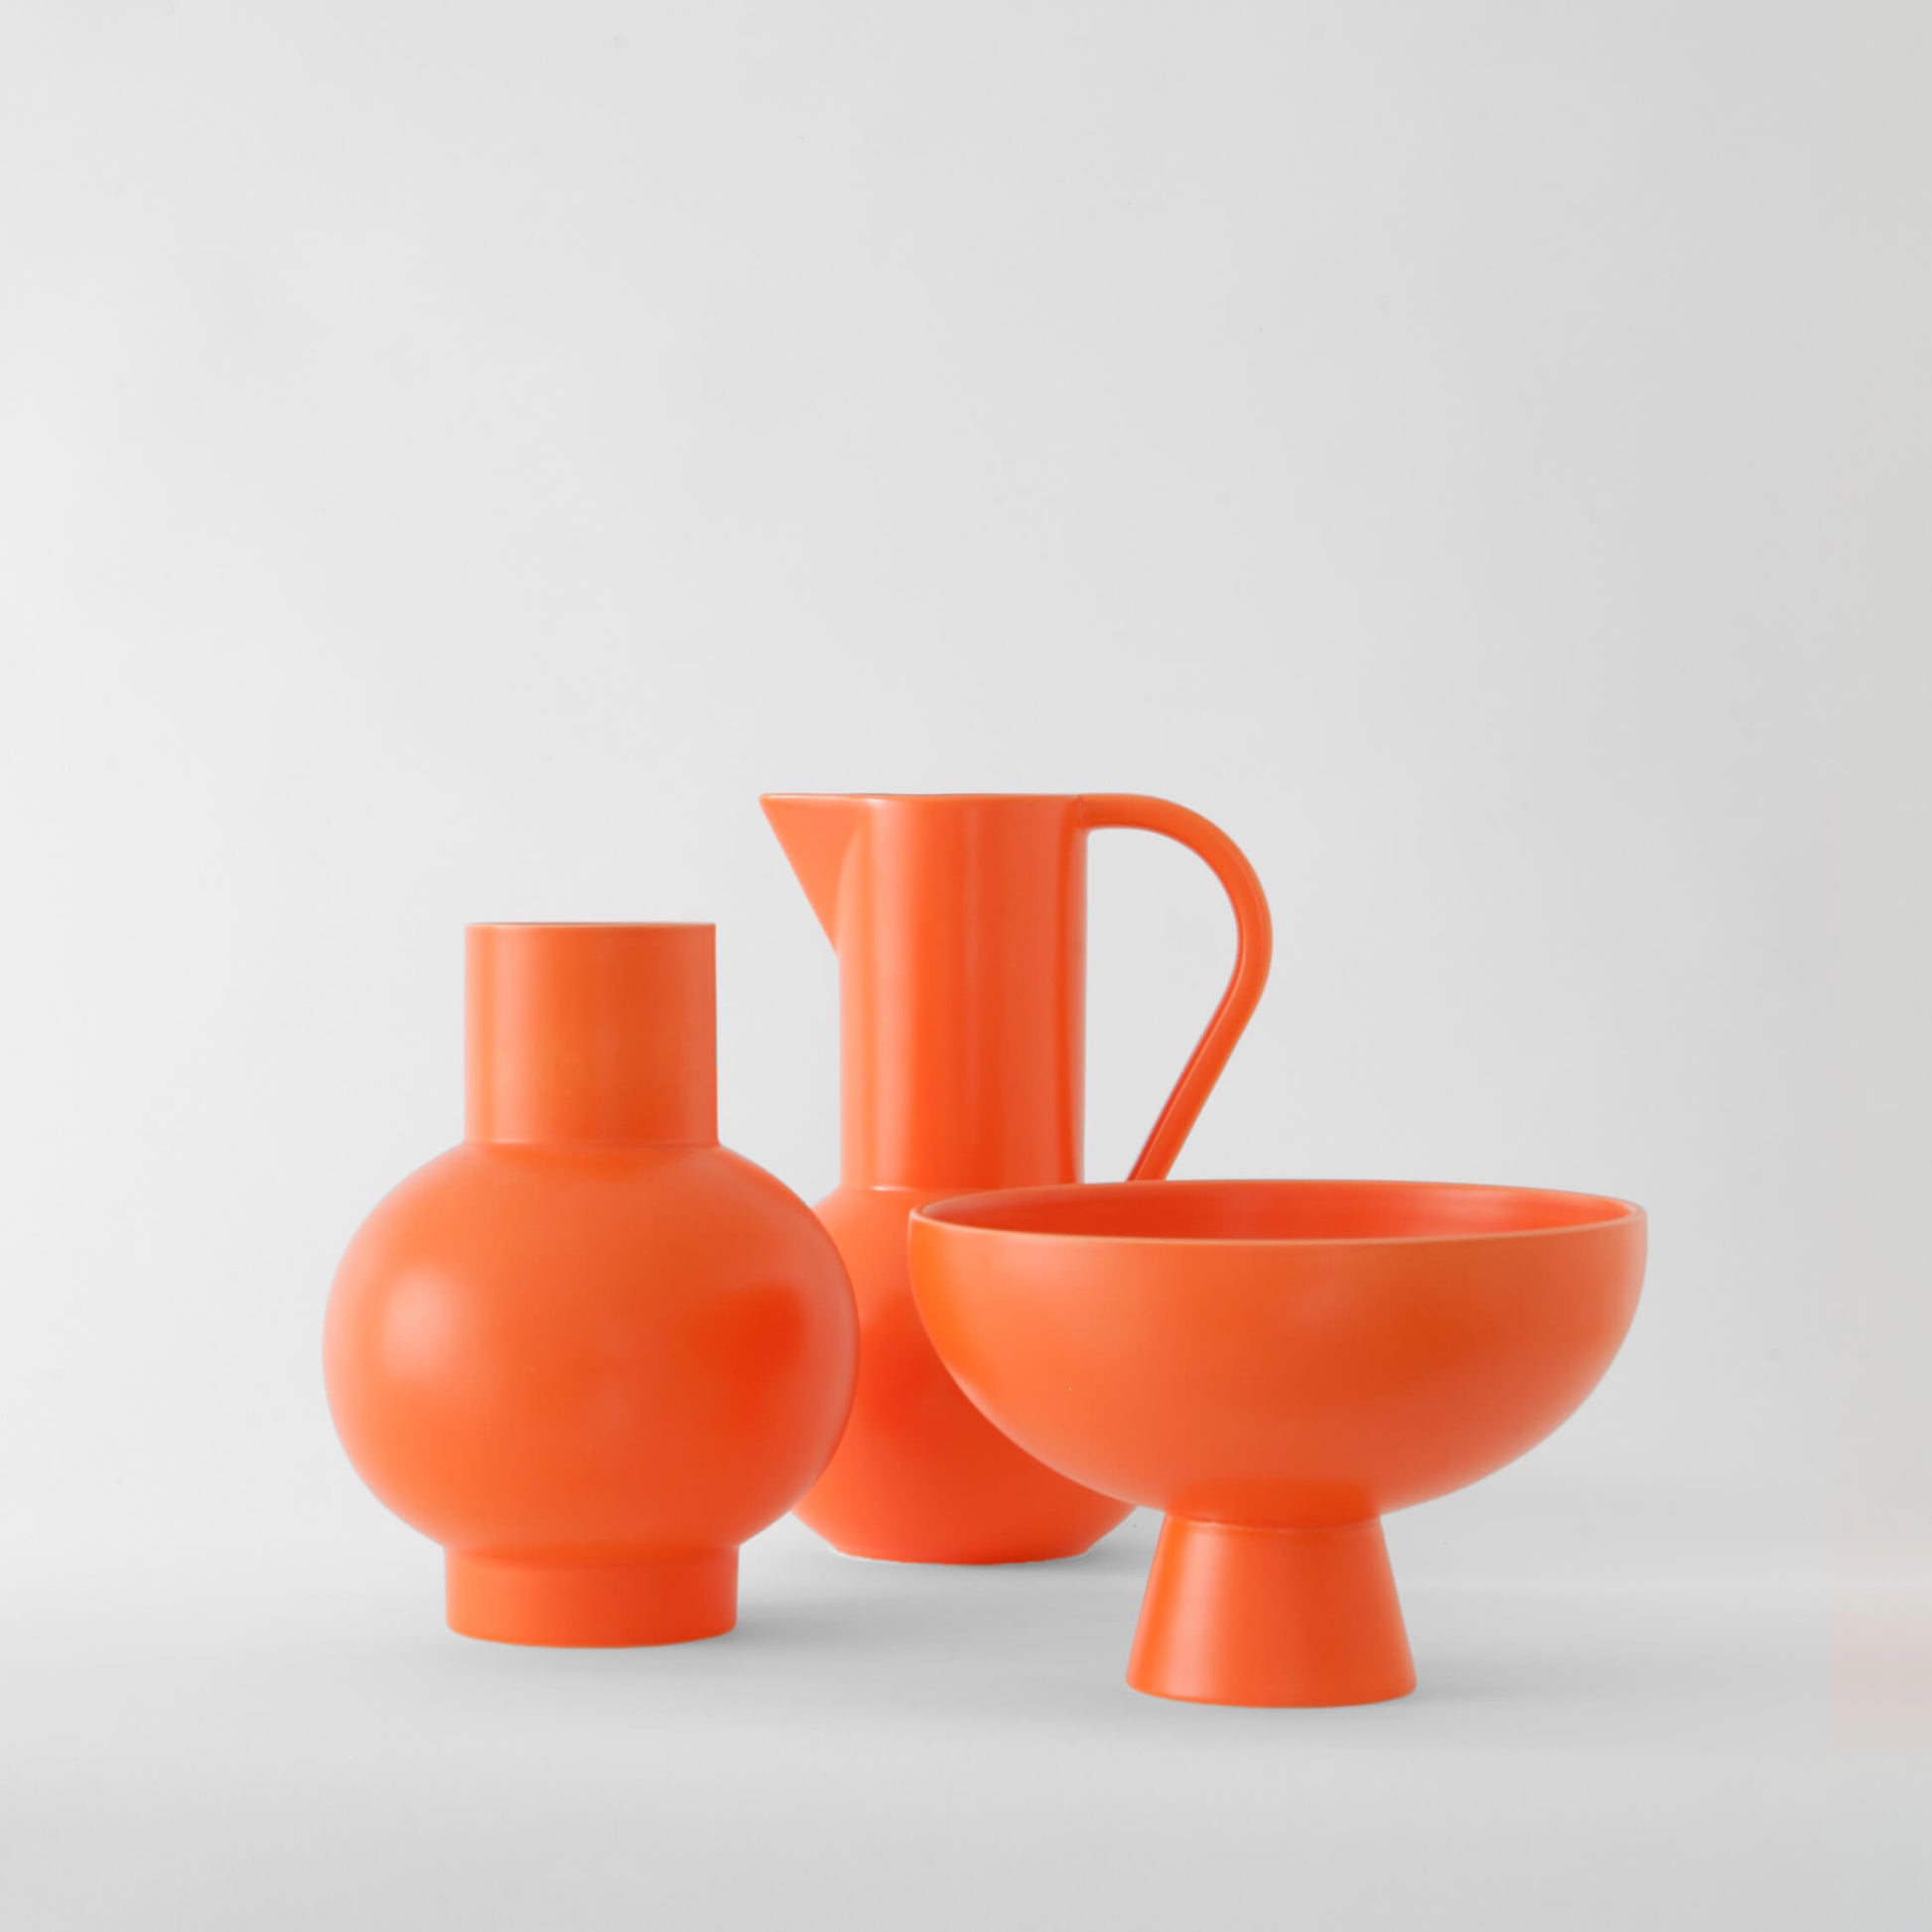 Strøm earthenware bowls by danish Nicholai Wiig Hansen for Raawii, Skandinavian Design Classic Strøm bowl available at Nave Shop, online concept store